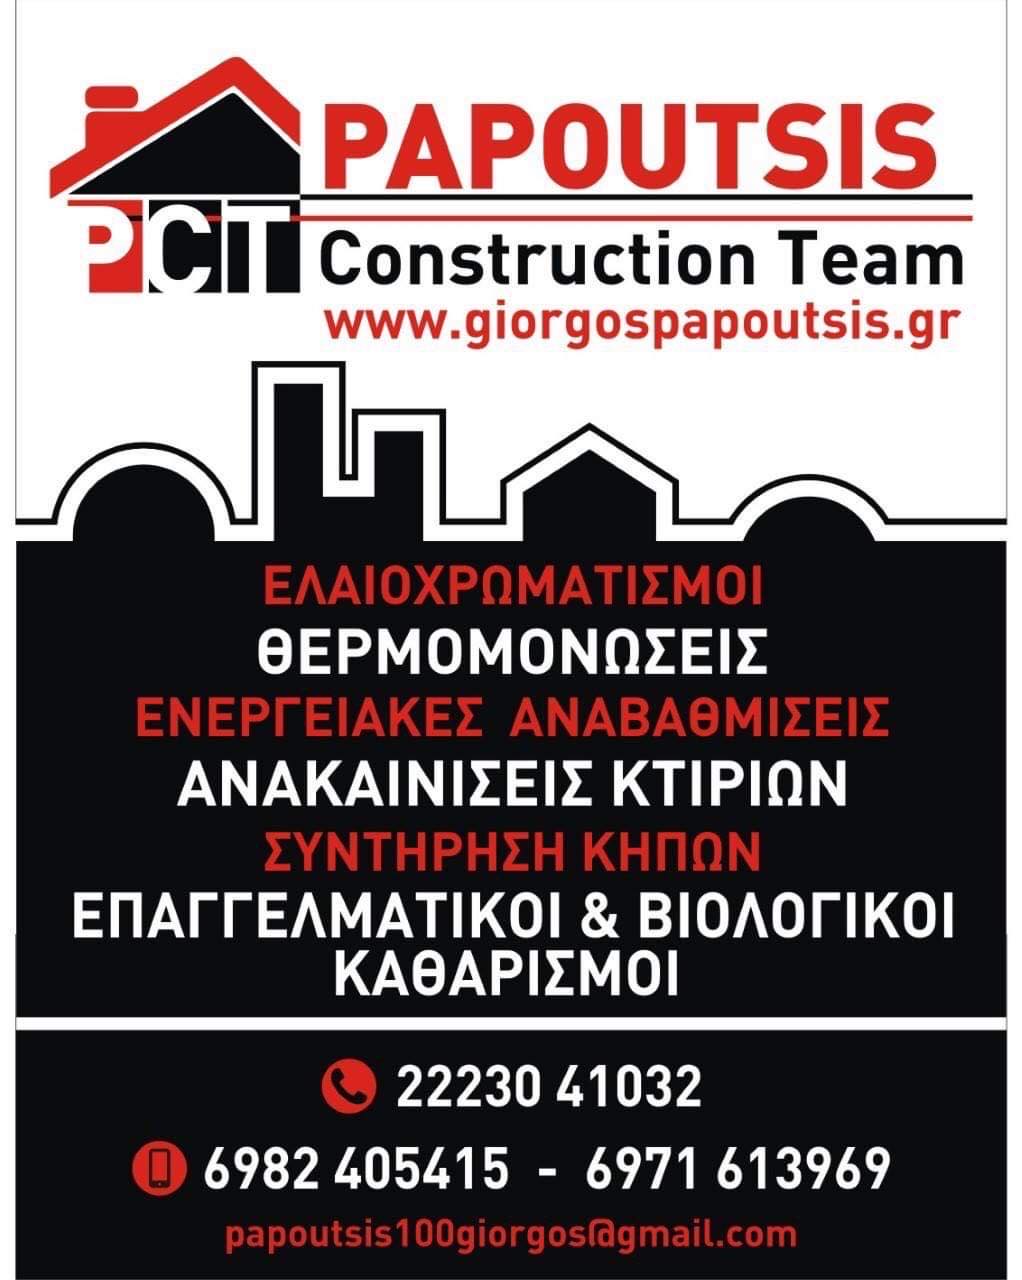 Papoutsis Construction Team: Διαθέτει τις καλύτερες τιμές της αγοράς